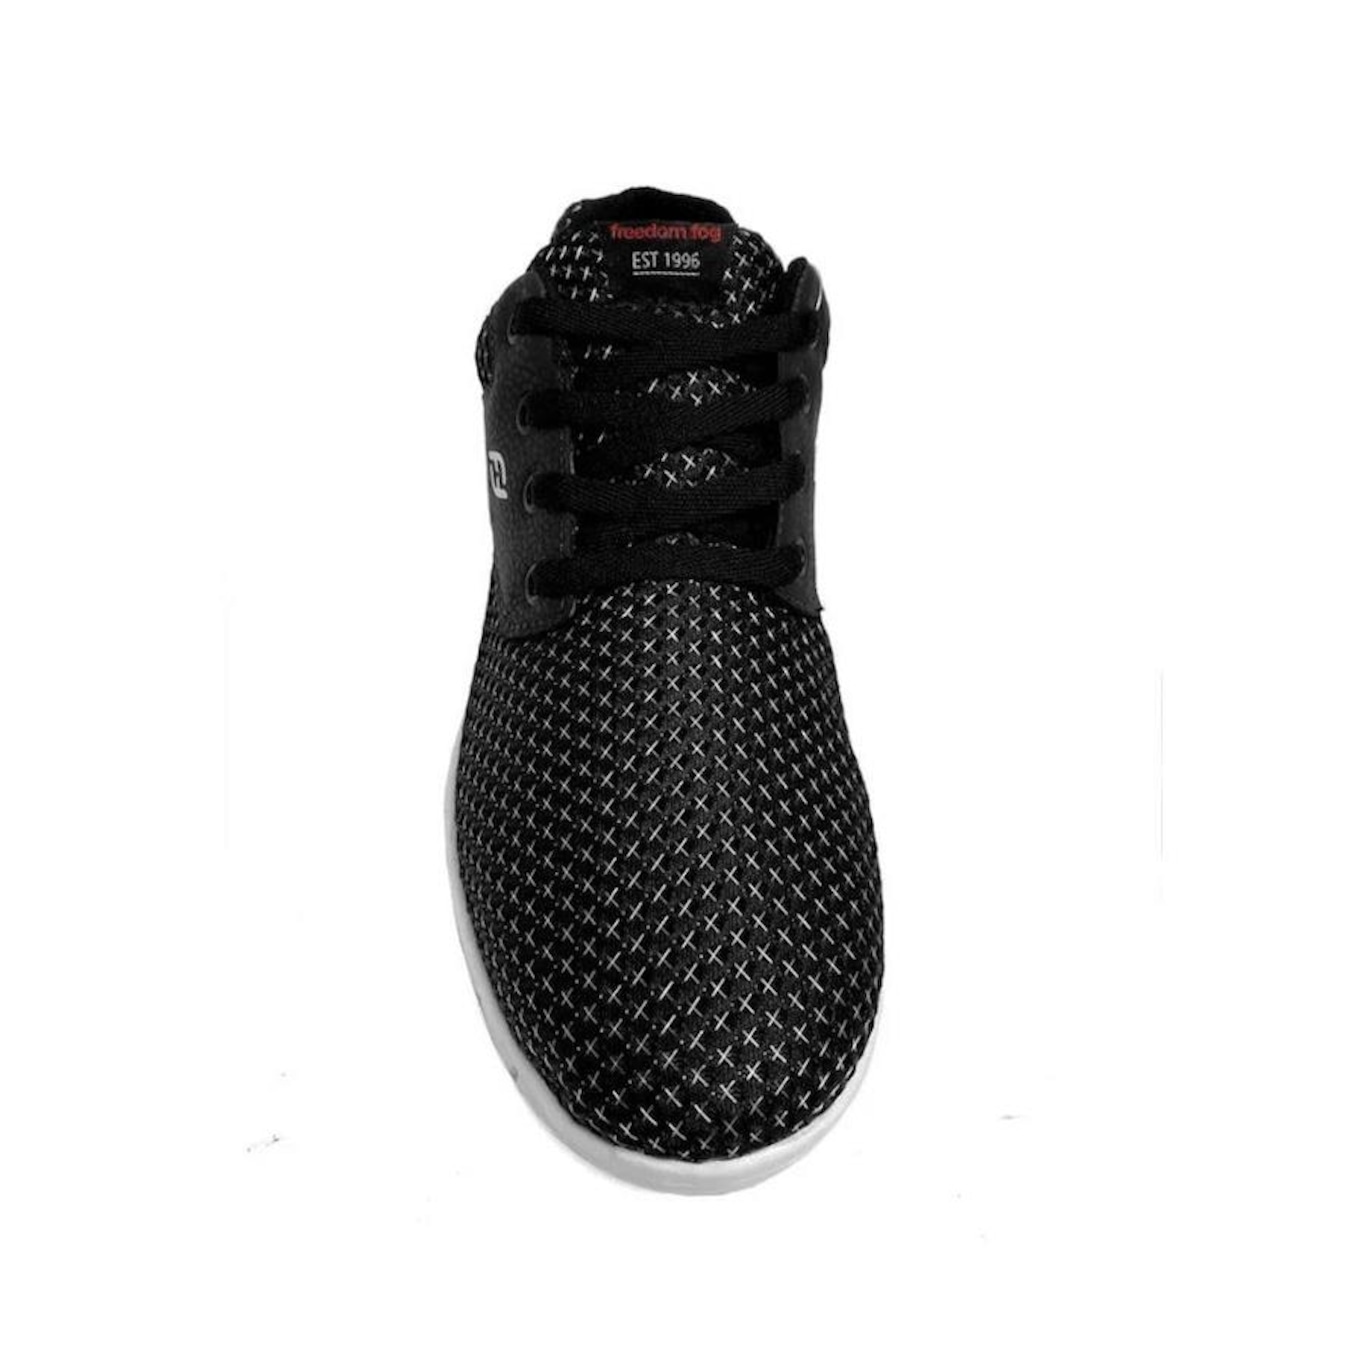 MAX FULL BLACK - Freedom Fog - Loja de calçados online